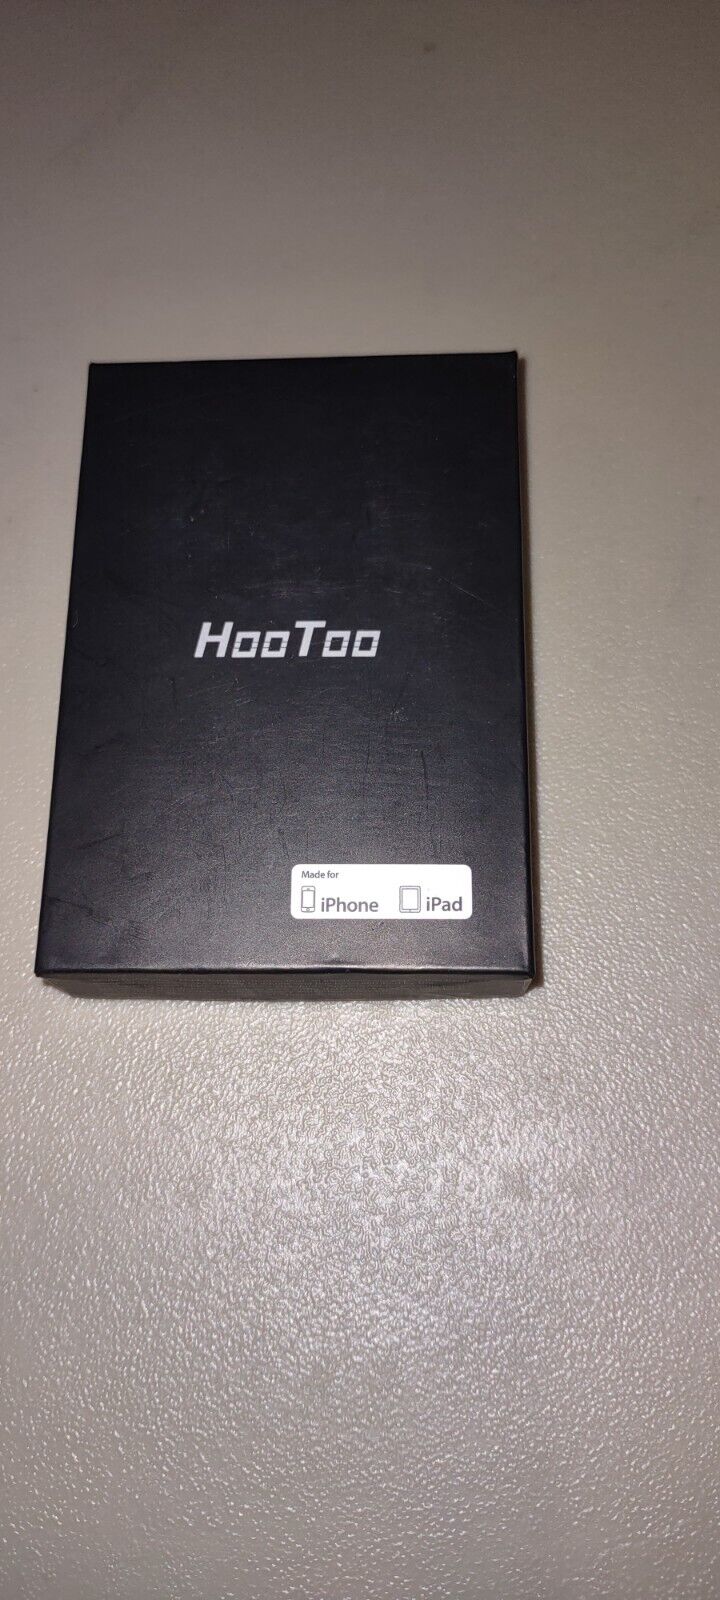 HooToo iPhone Flash Drive USB Flash Drive Memory 32GB, HT-IM001